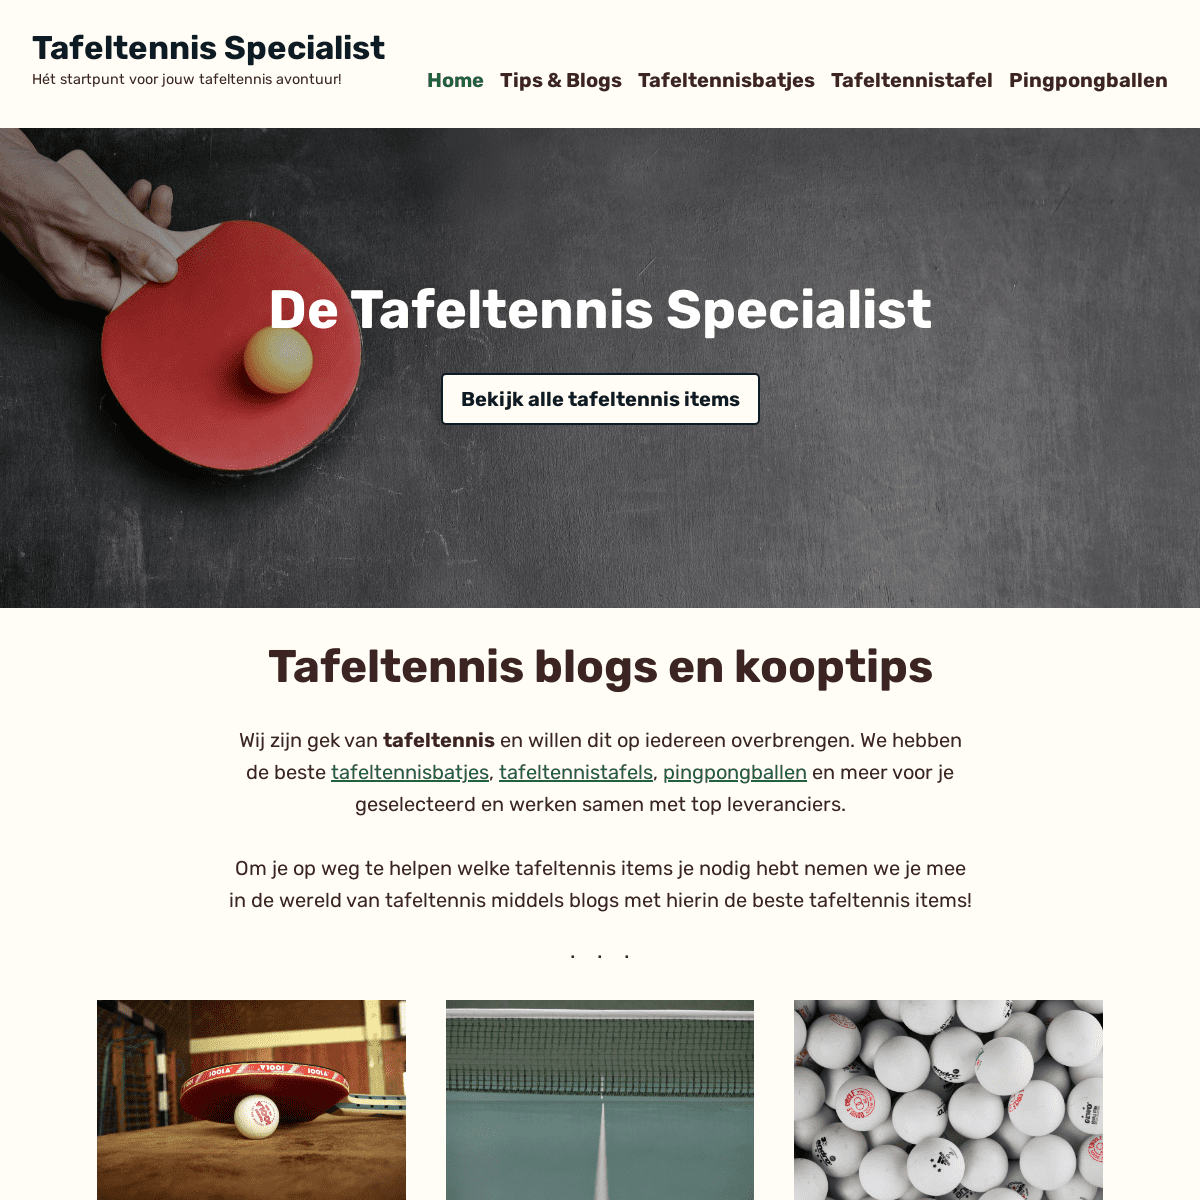 A complete backup of https://tafeltennisspecialist.nl